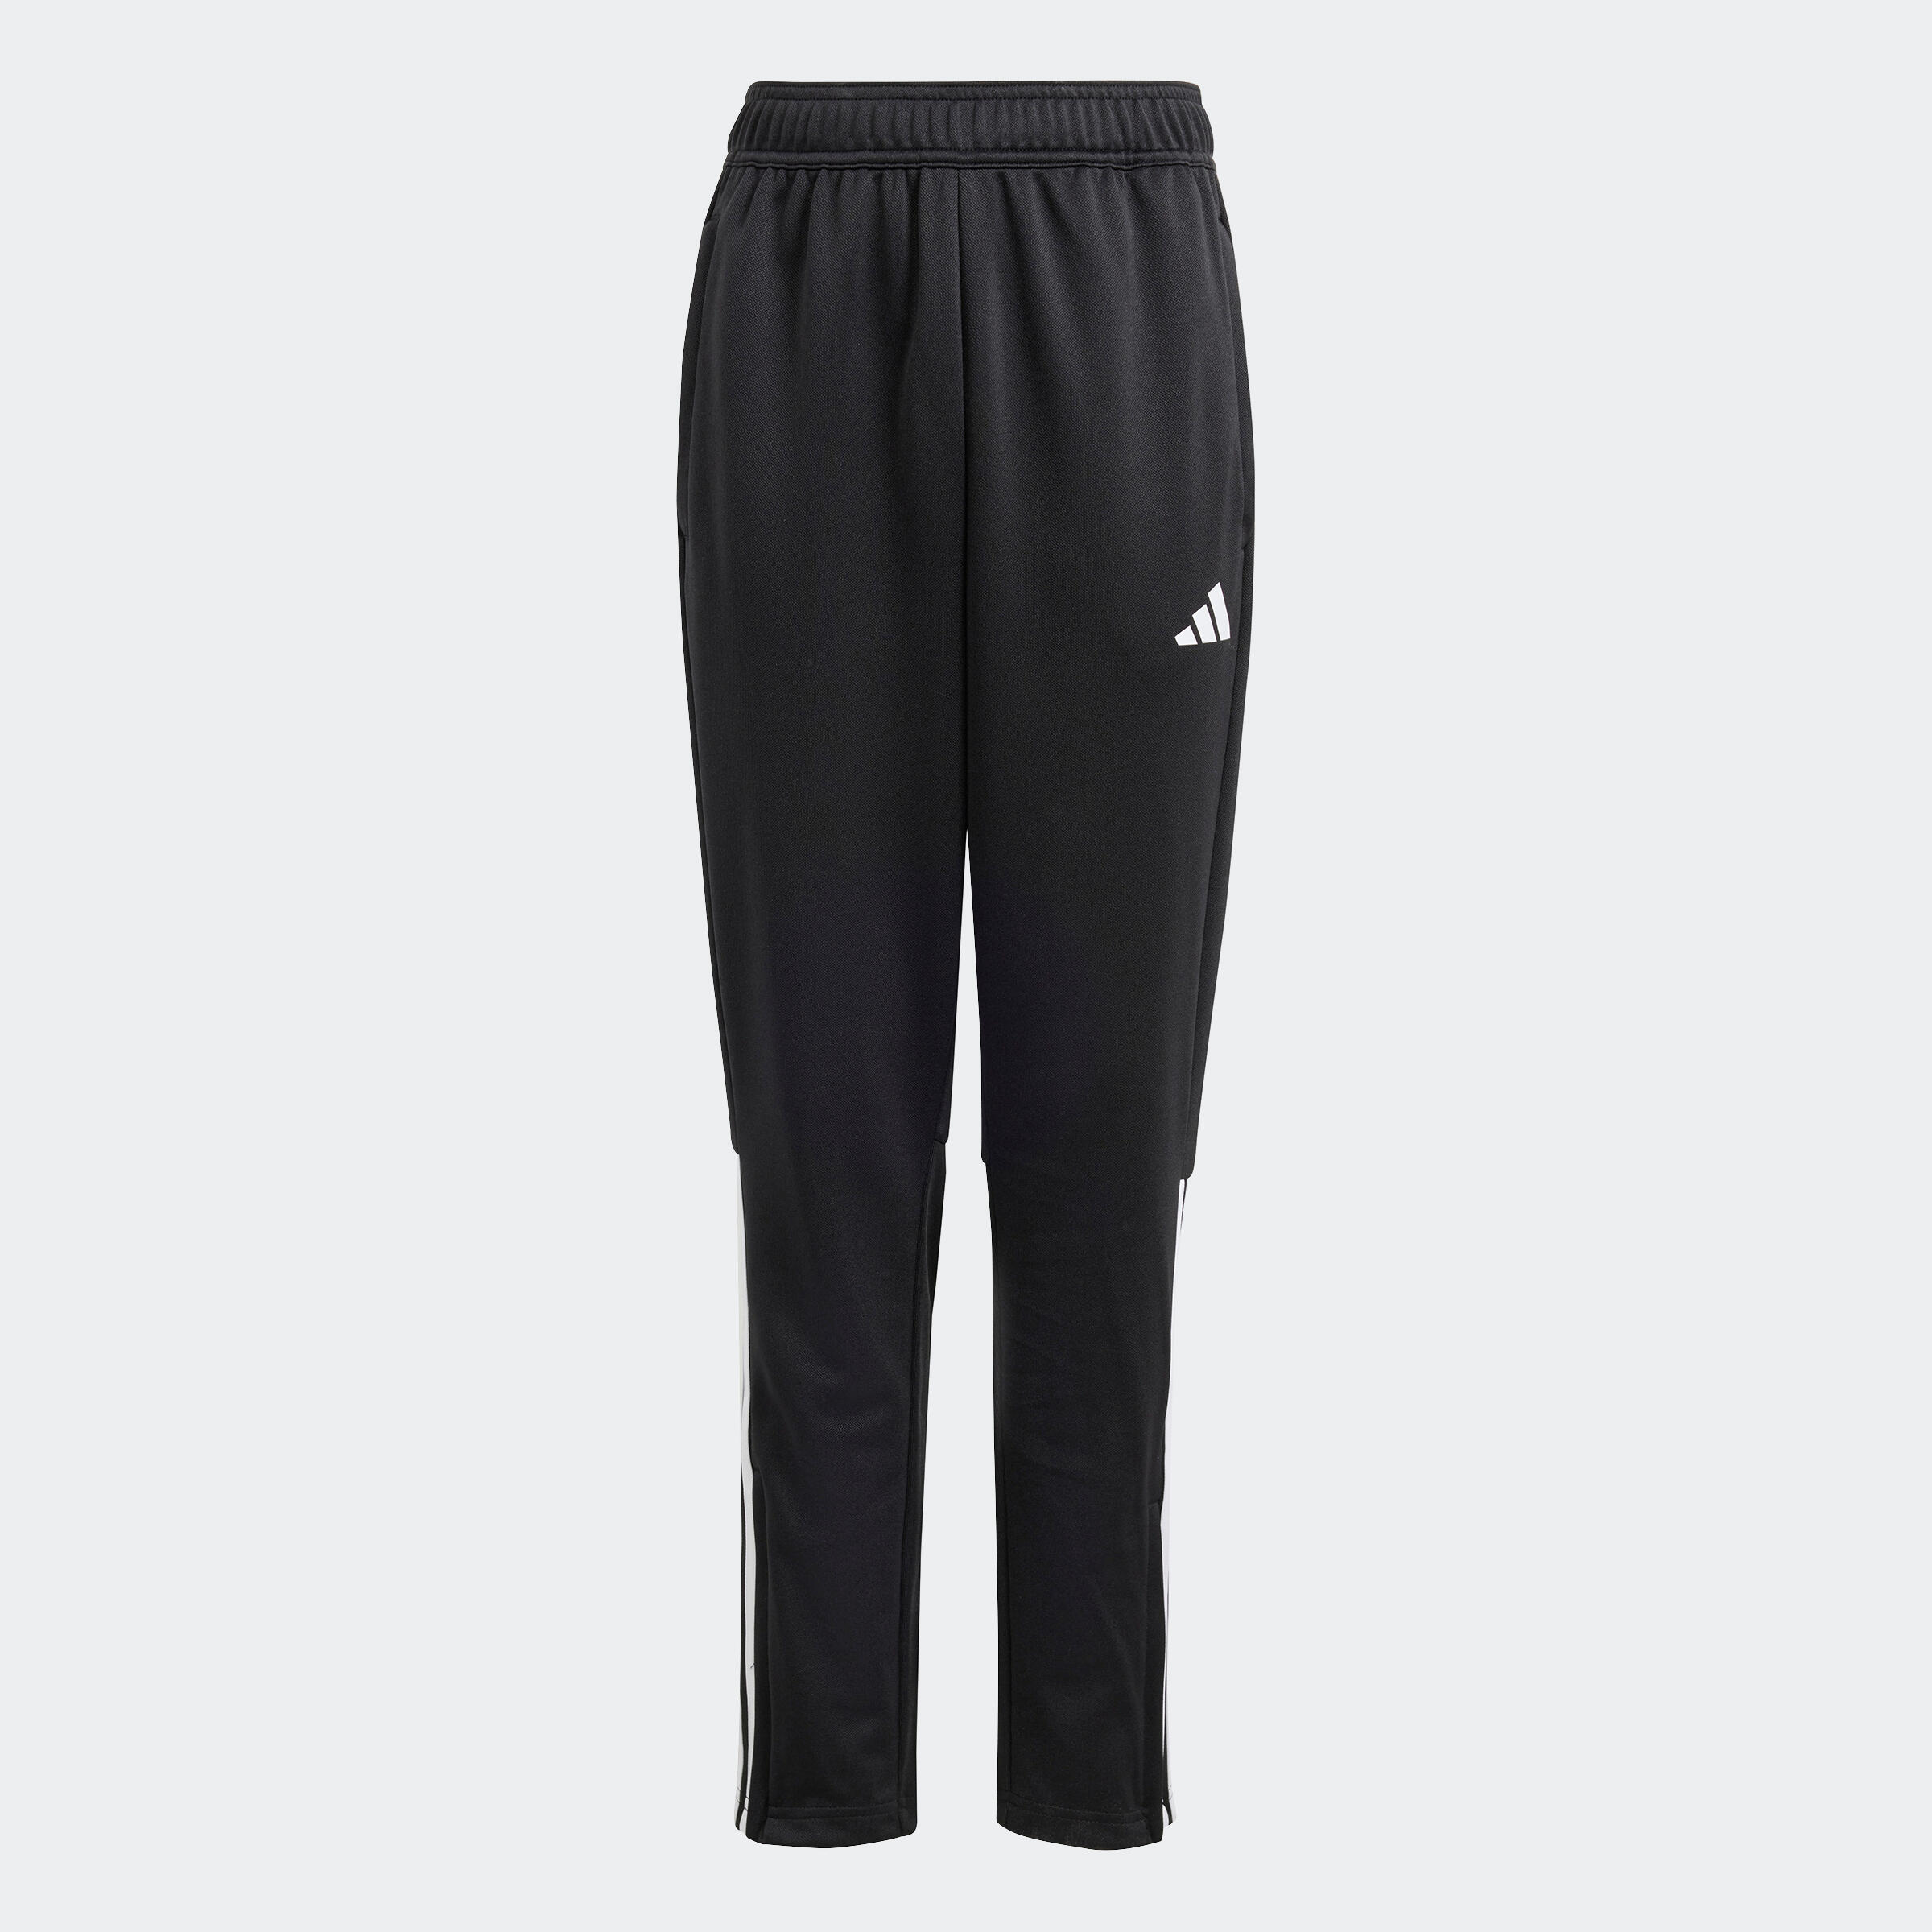 Pantalon De Antrenament De Fotbal Adidas Sereno Negru Copii